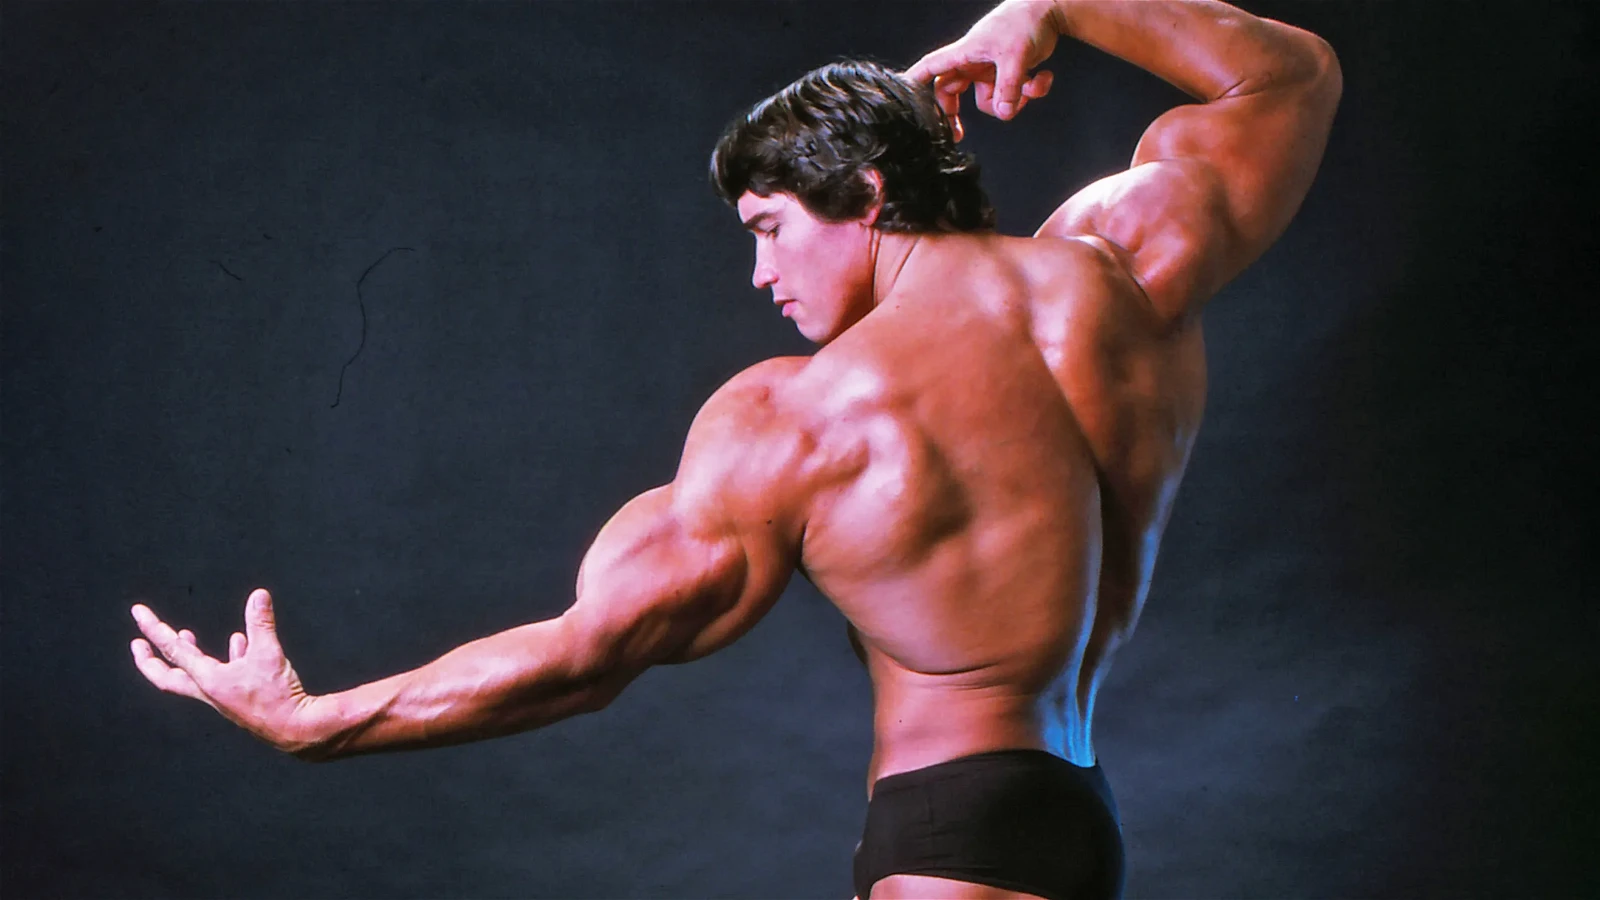 Arnold Schwarzenegger during his bodybuilding days